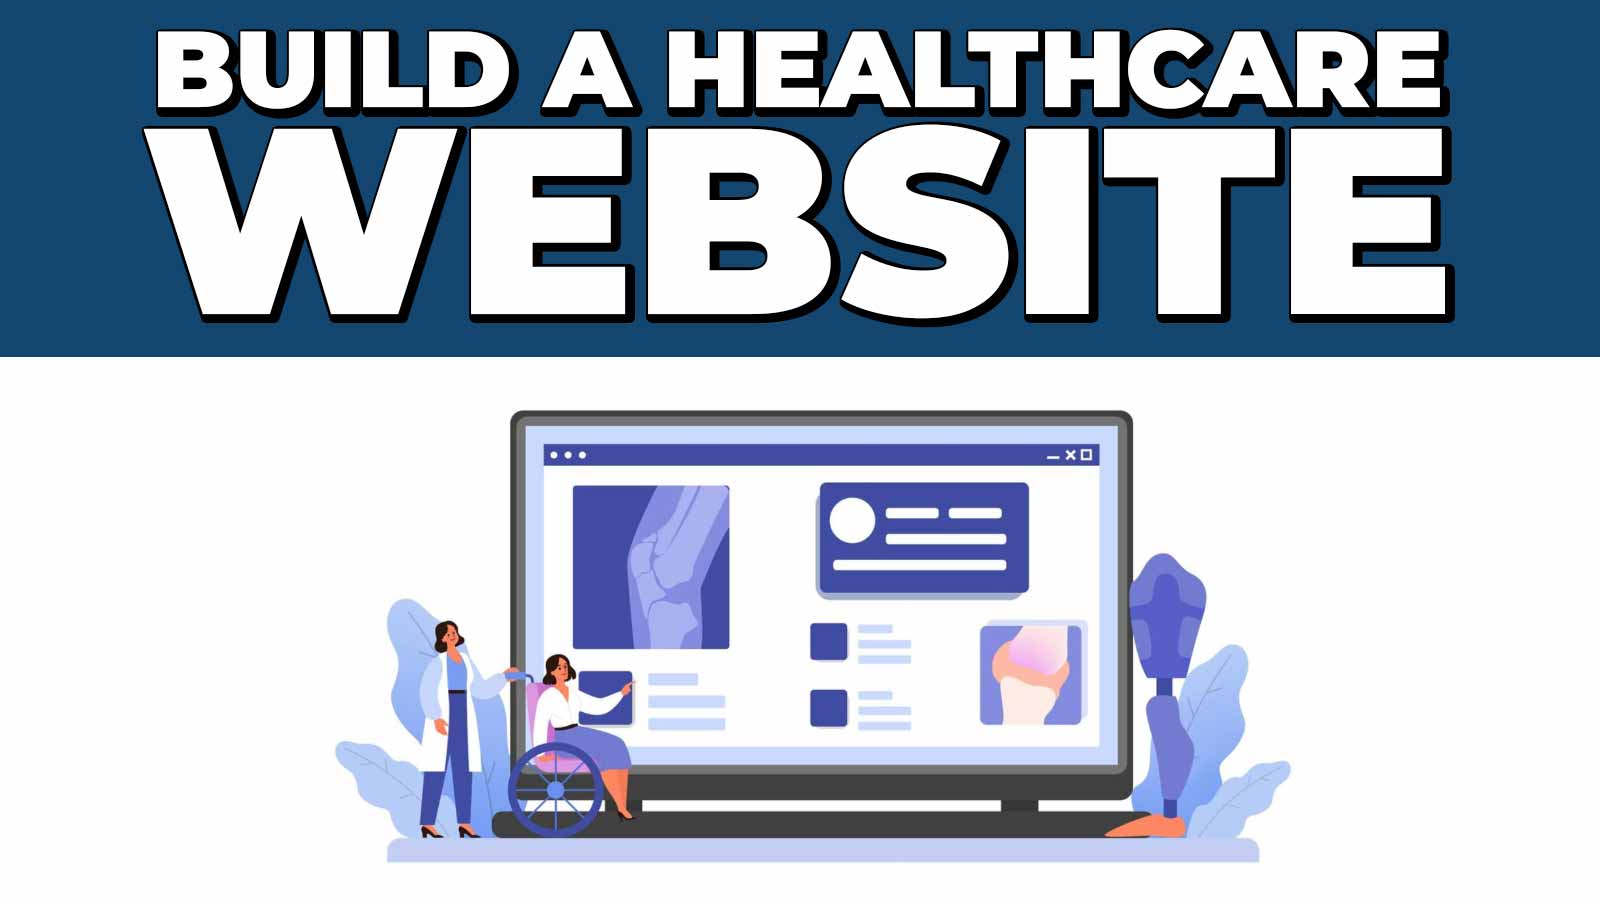 BUILD A HEALTHCARE WEBSITE